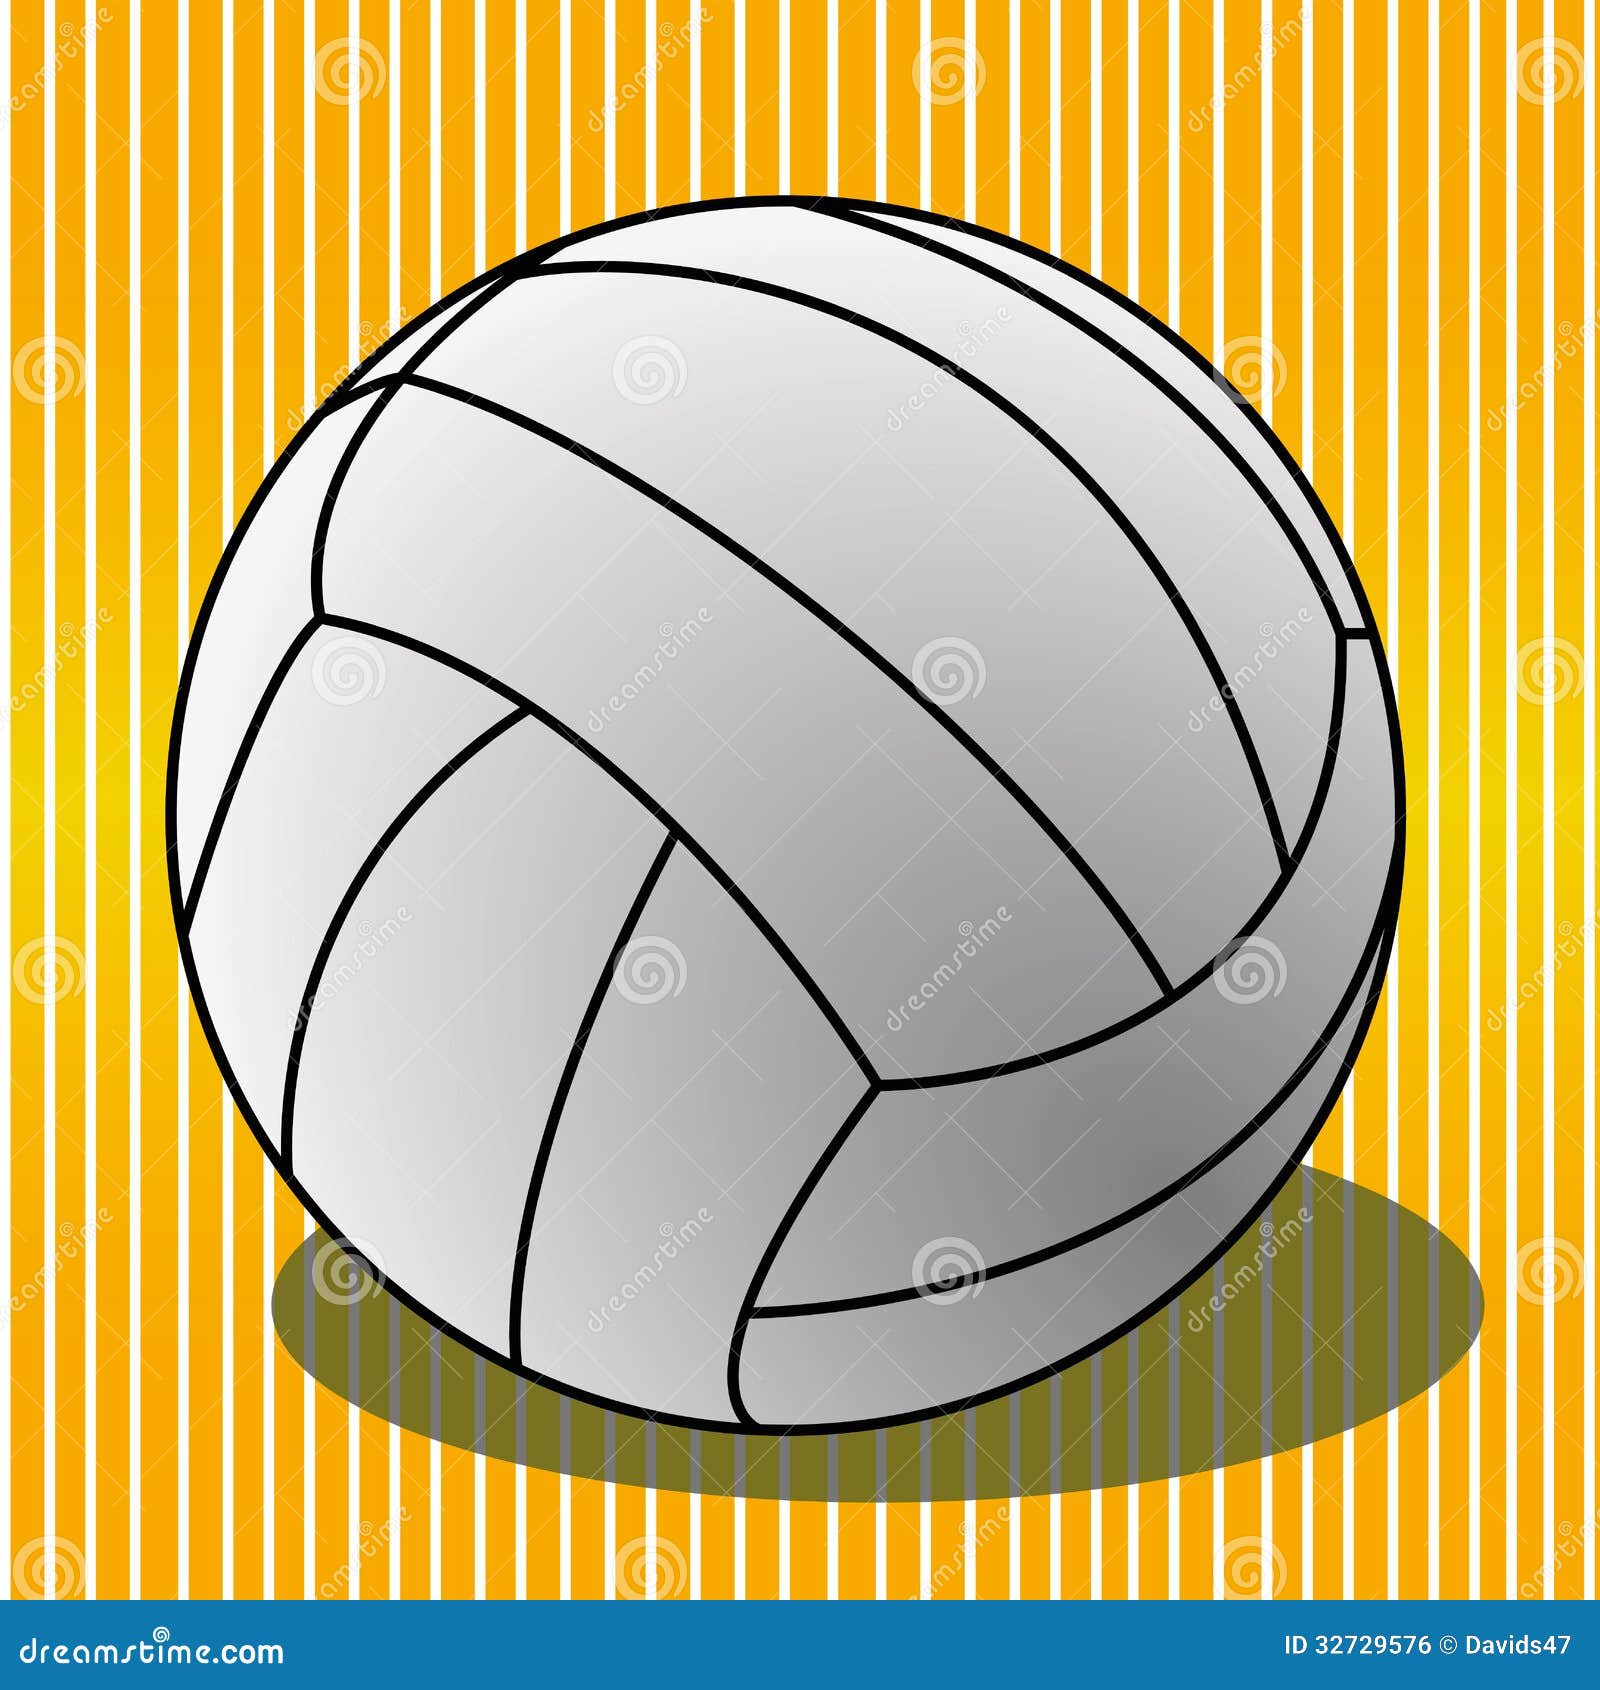 Volleyball stock vector. Illustration of tool, equipment - 32729576